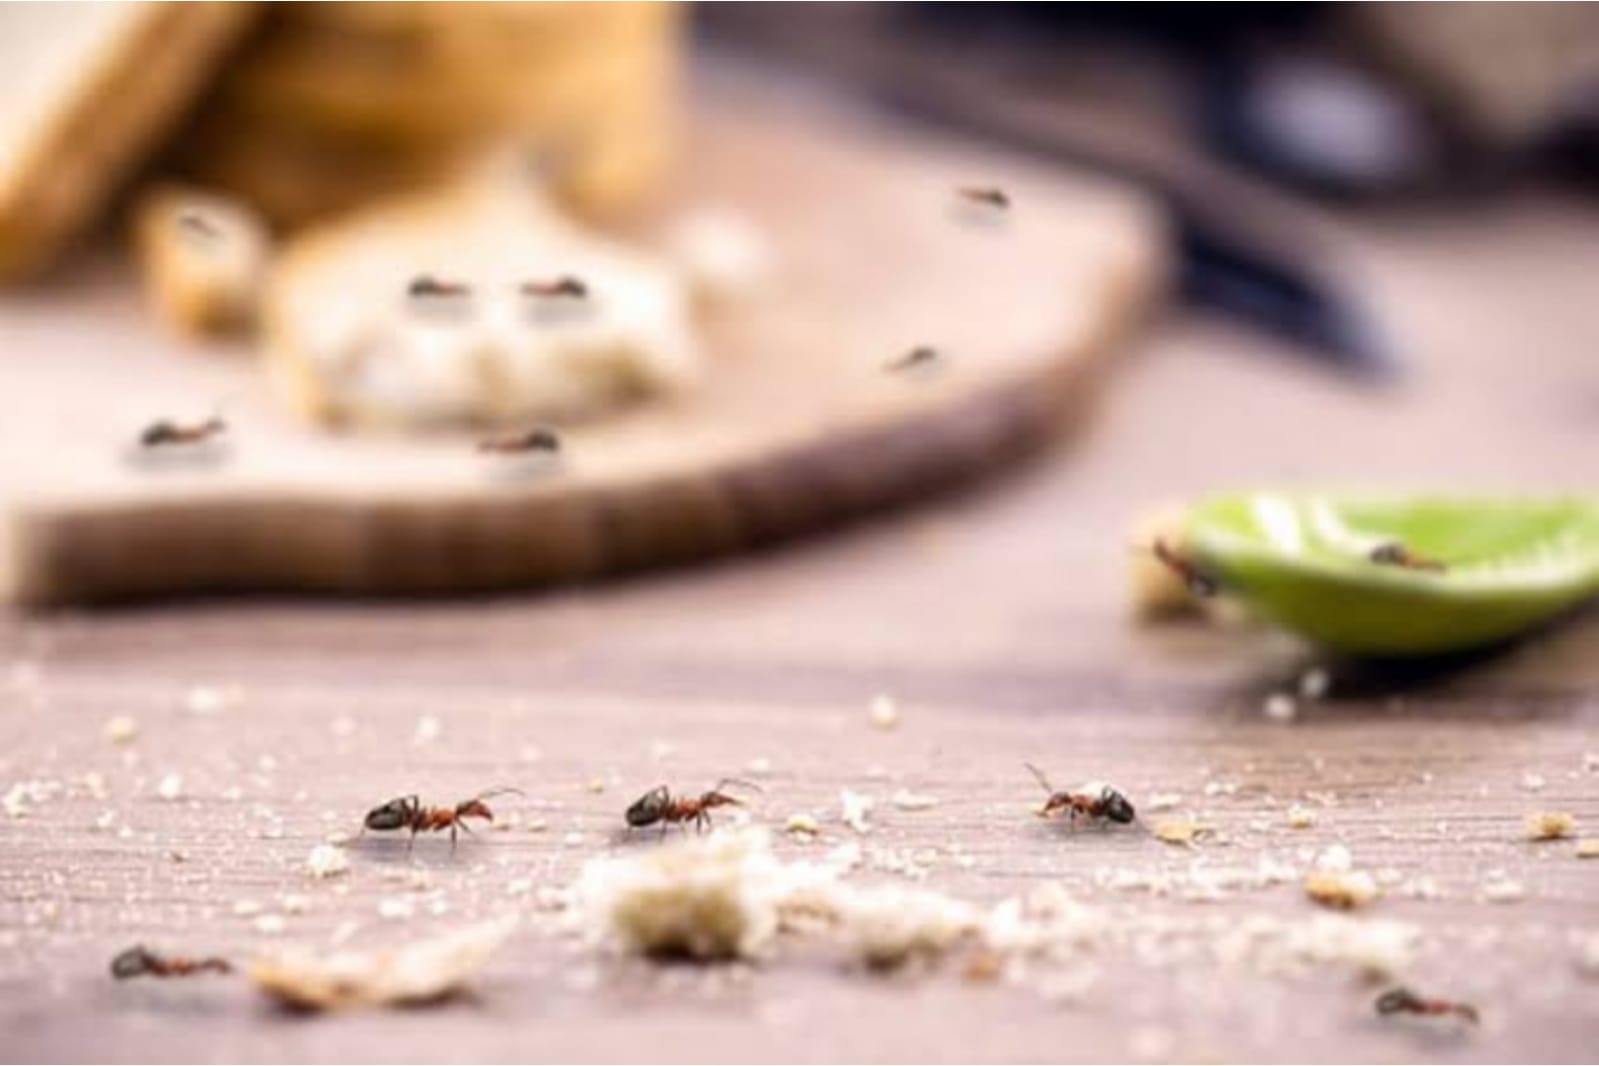 Cara Efektif Agar Semut Tidak Naik ke Meja Makan, Hanya Pakai Bahan Dapur, Makanan Dijamin Aman